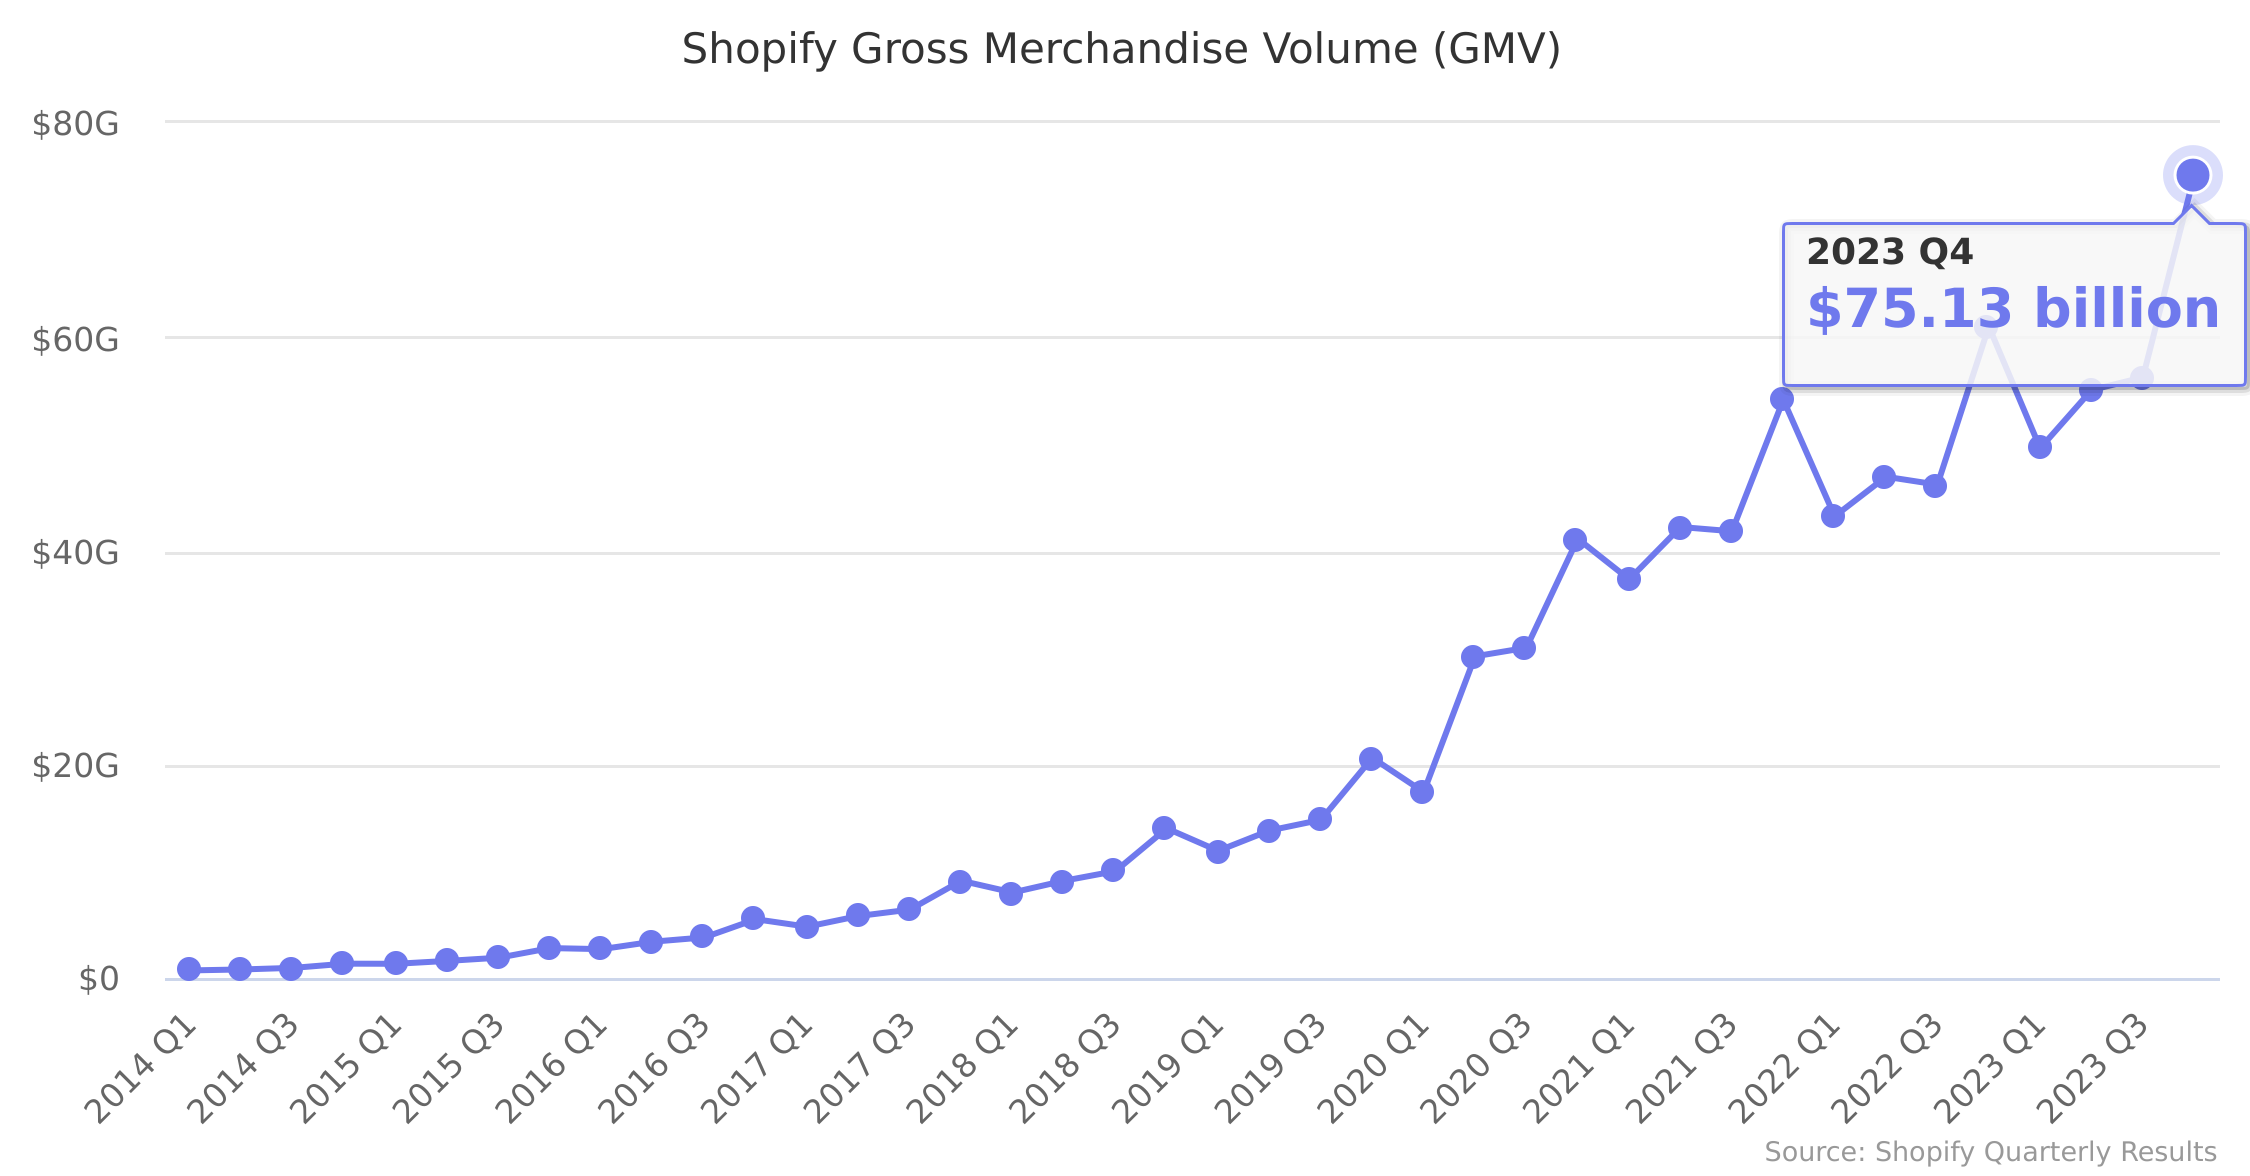 Shopify Gross Merchandise Volume (GMV) 2014-2023